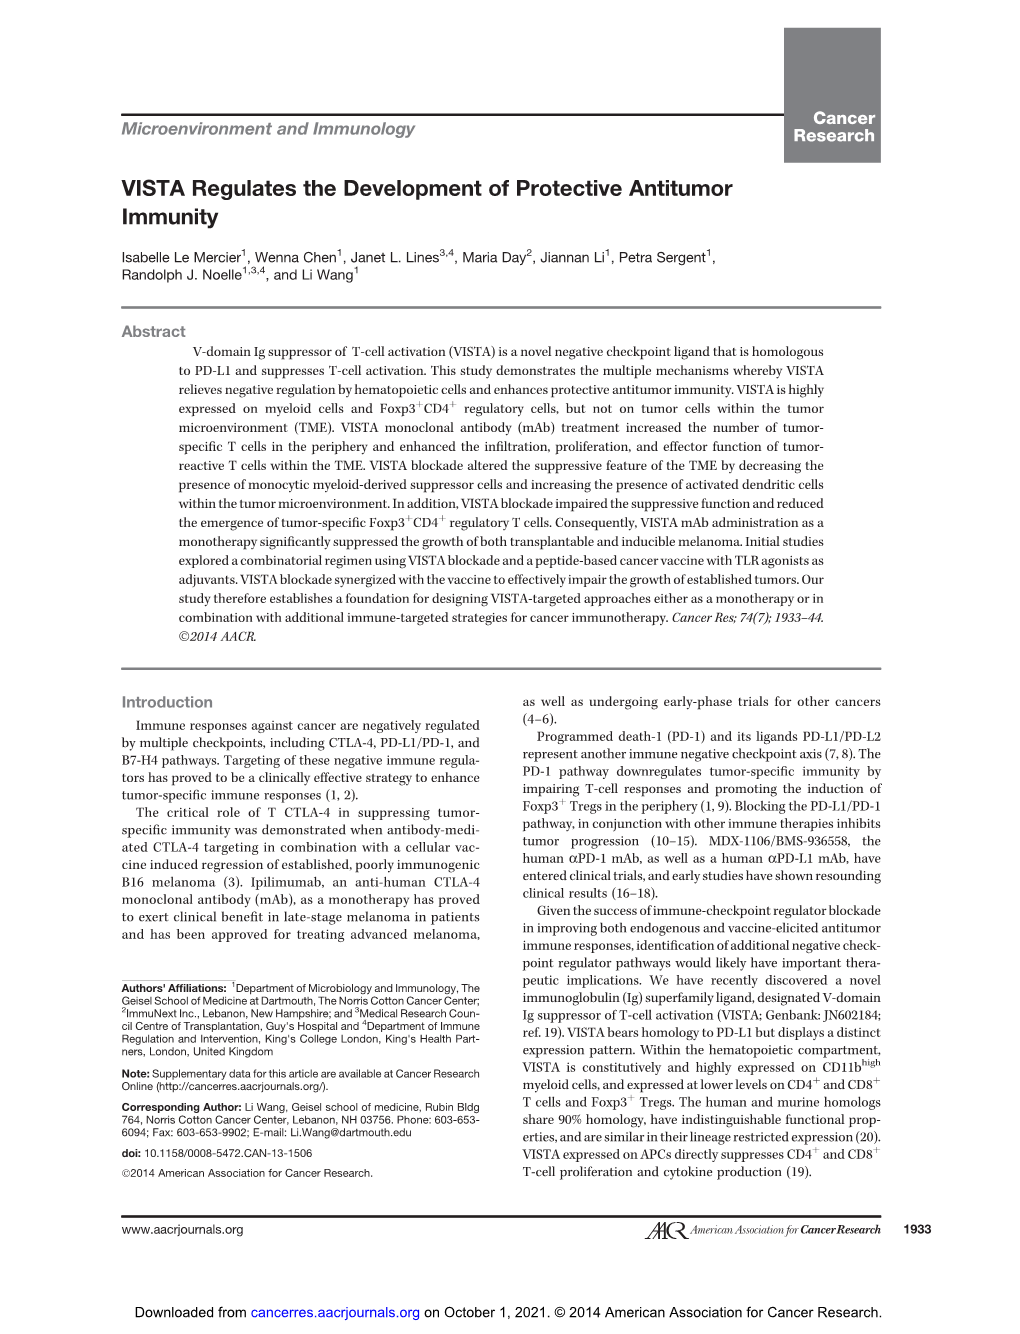 VISTA Regulates the Development of Protective Antitumor Immunity